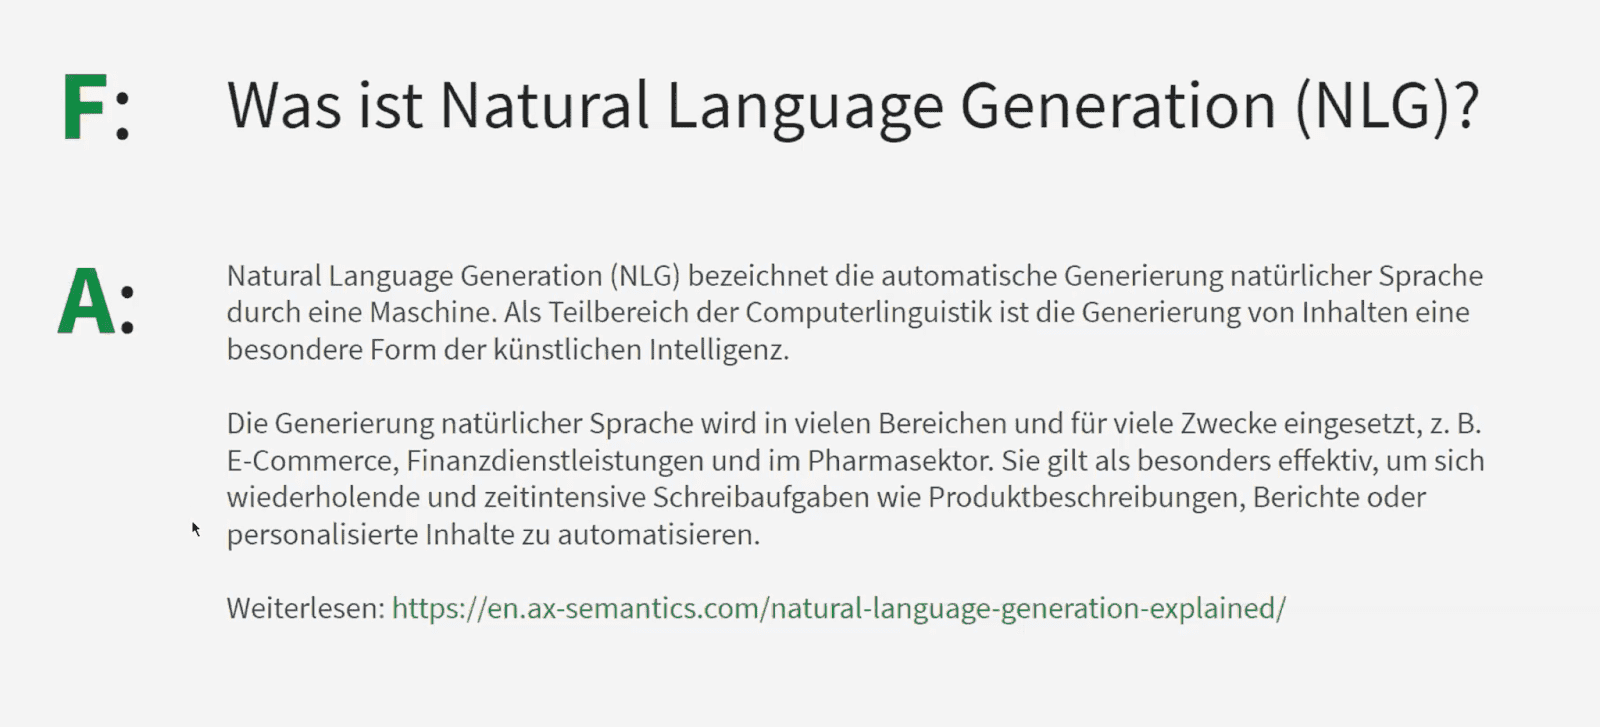 FAQ zu Natural Language Generation AX Semantics